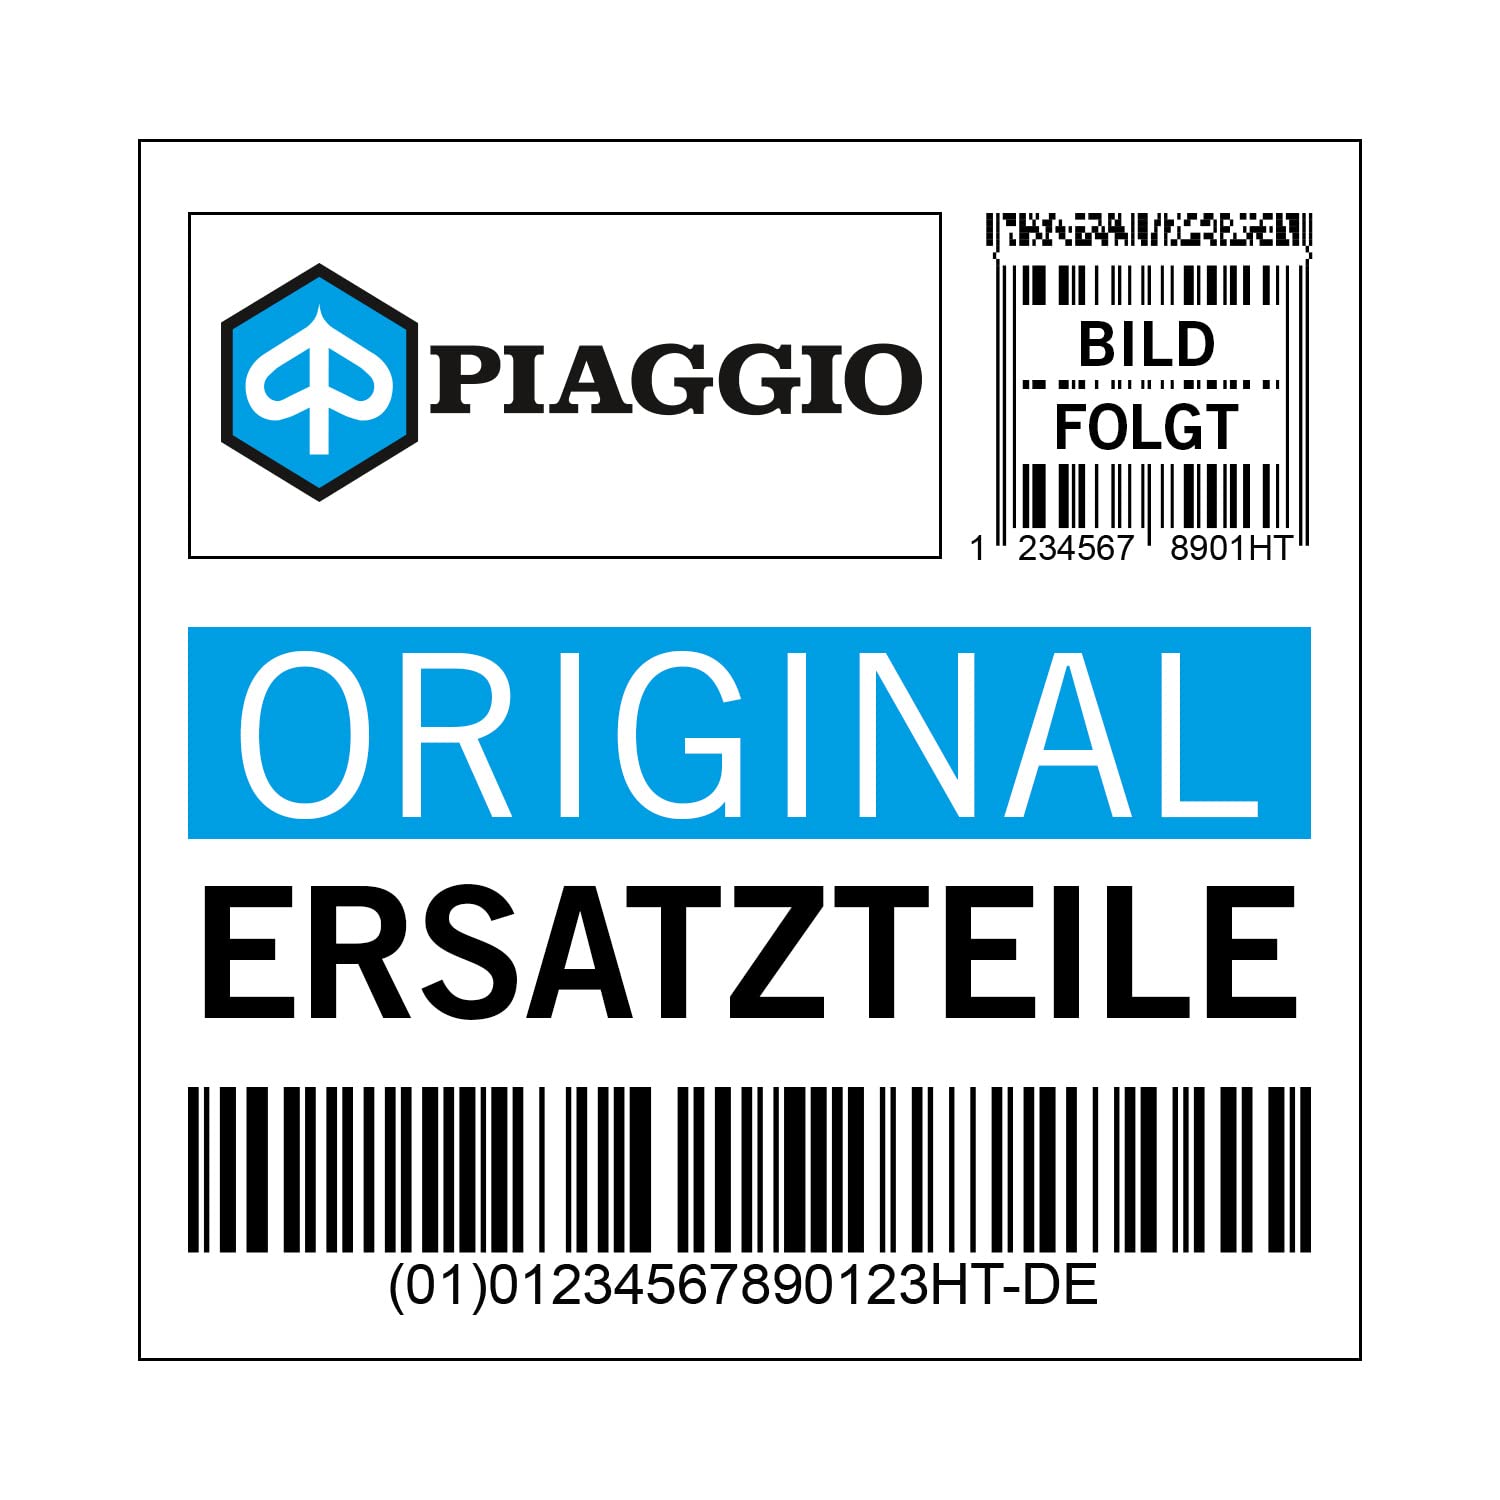 Achswelle Piaggio, L1557143 von Maxtuned